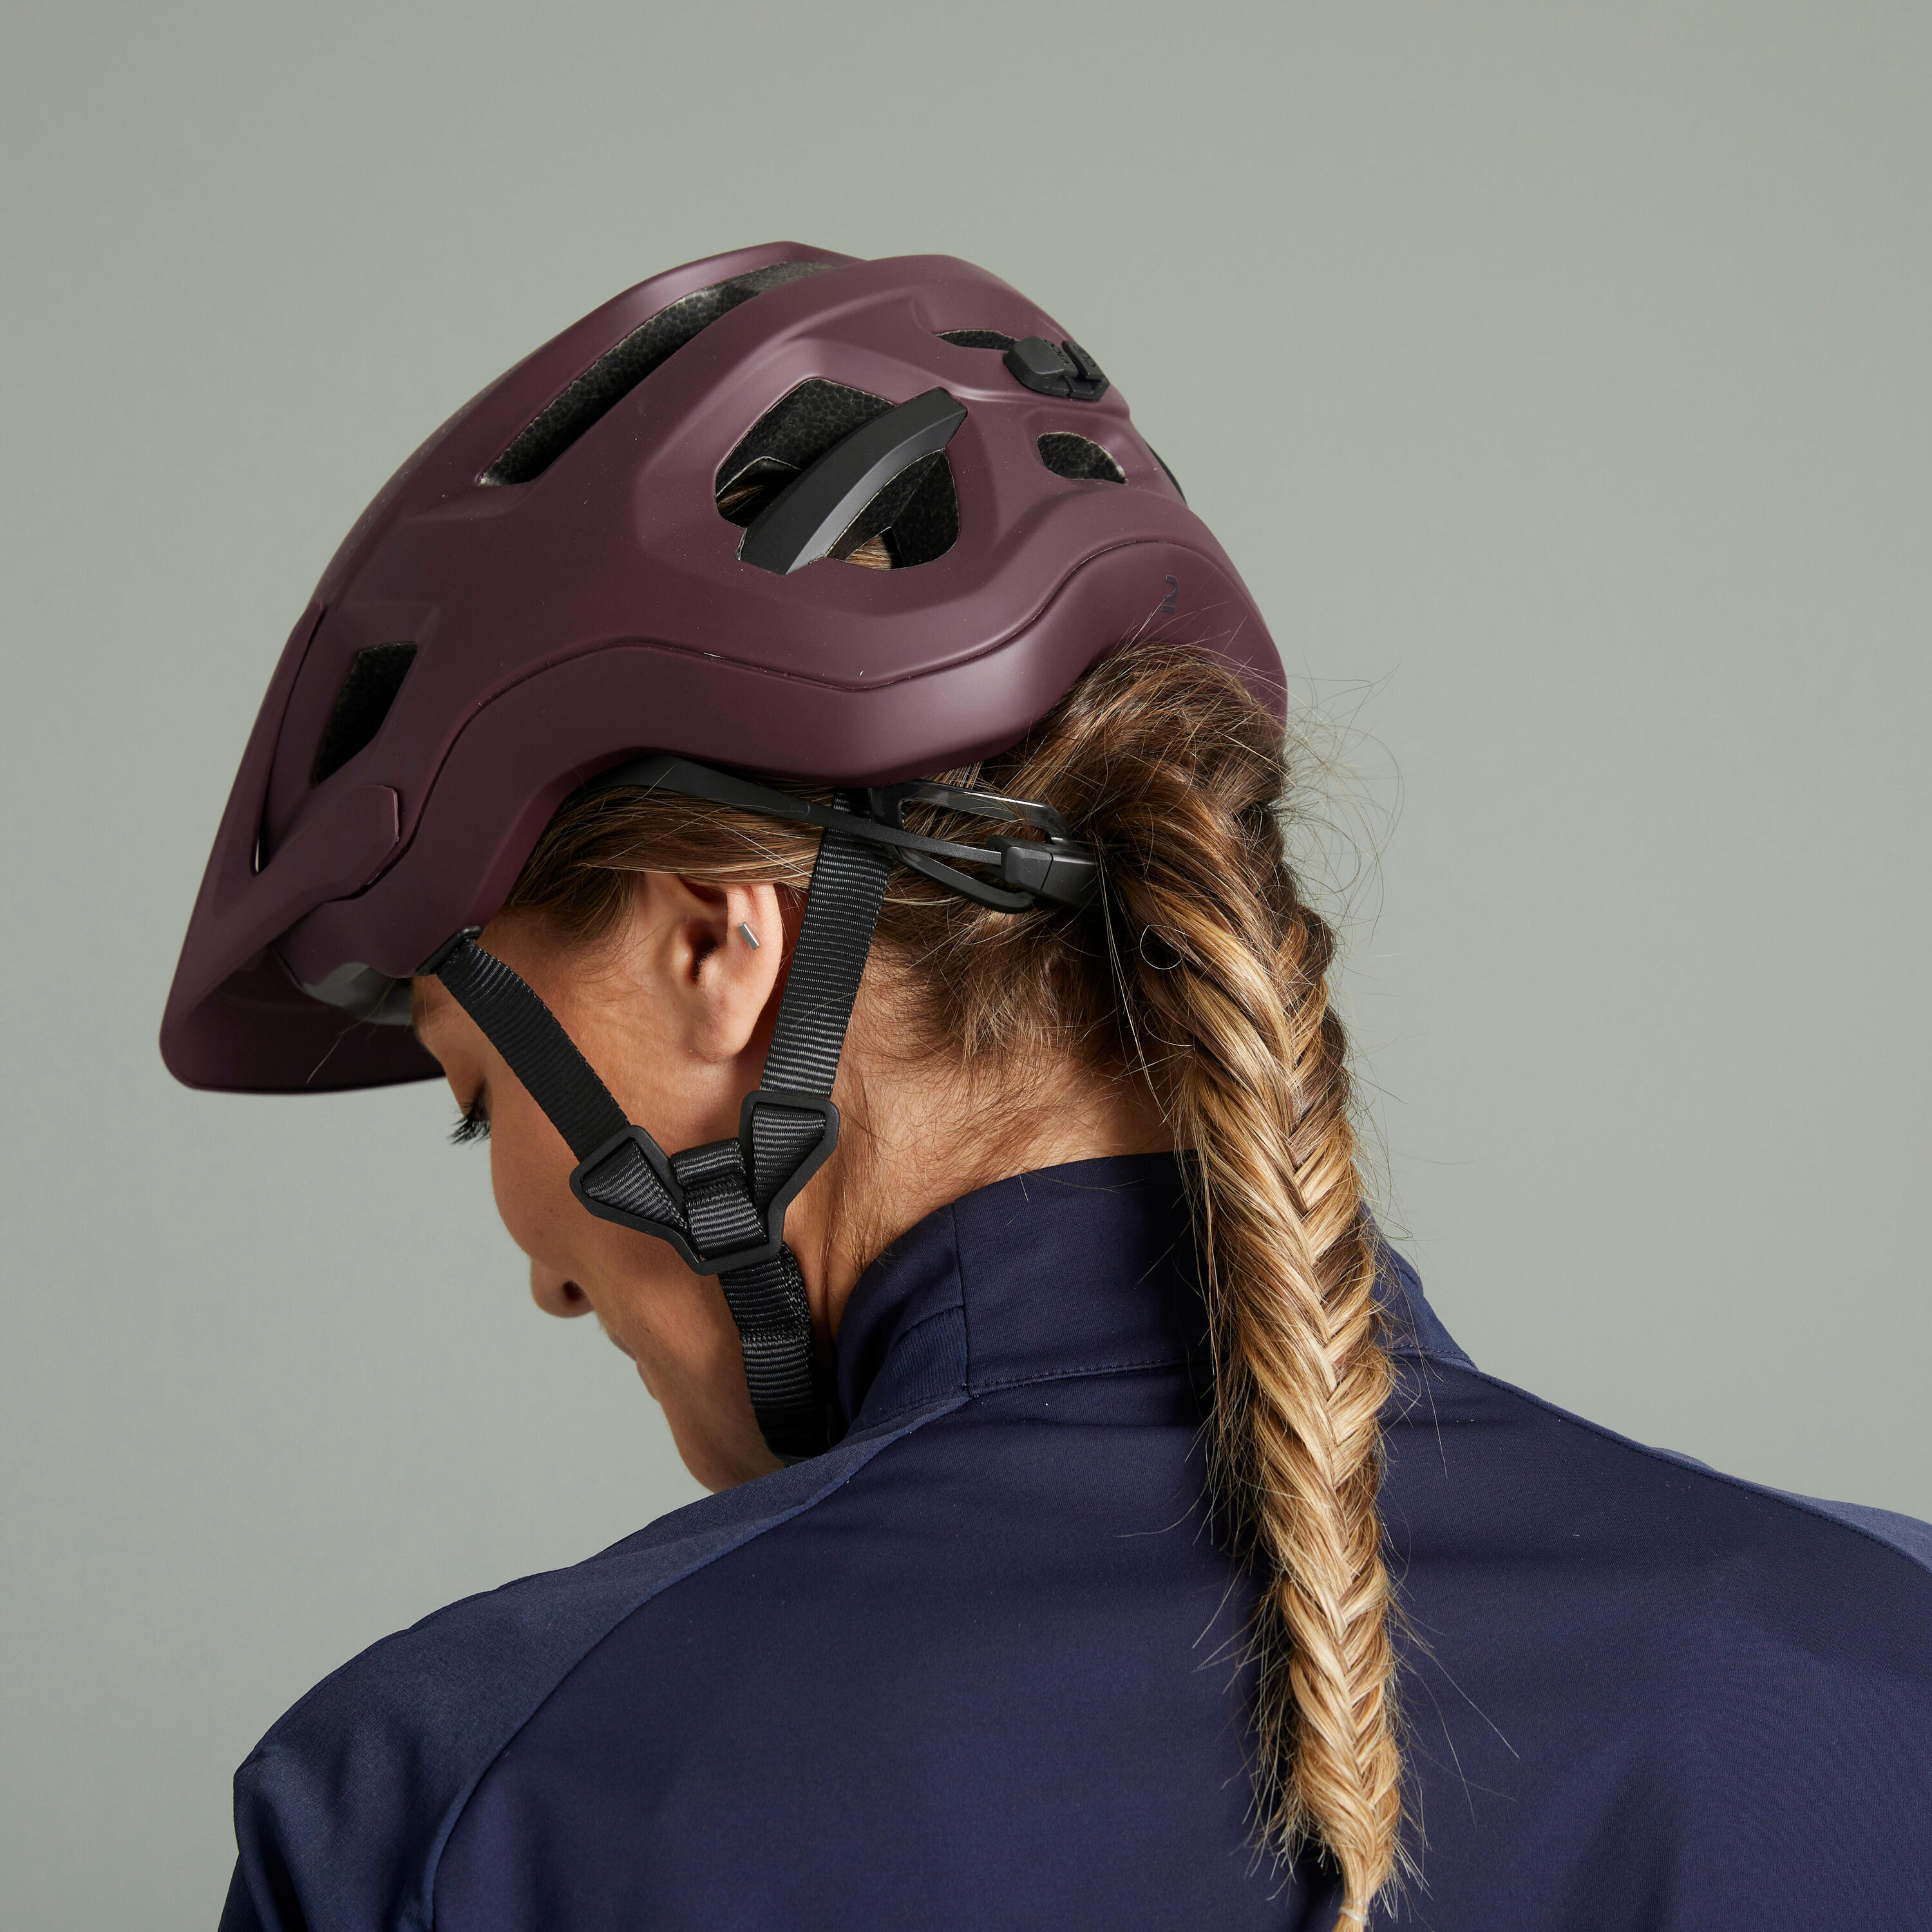 ROCKRIDER Mountain Bike Helmet EXPL 500 - Burgundy